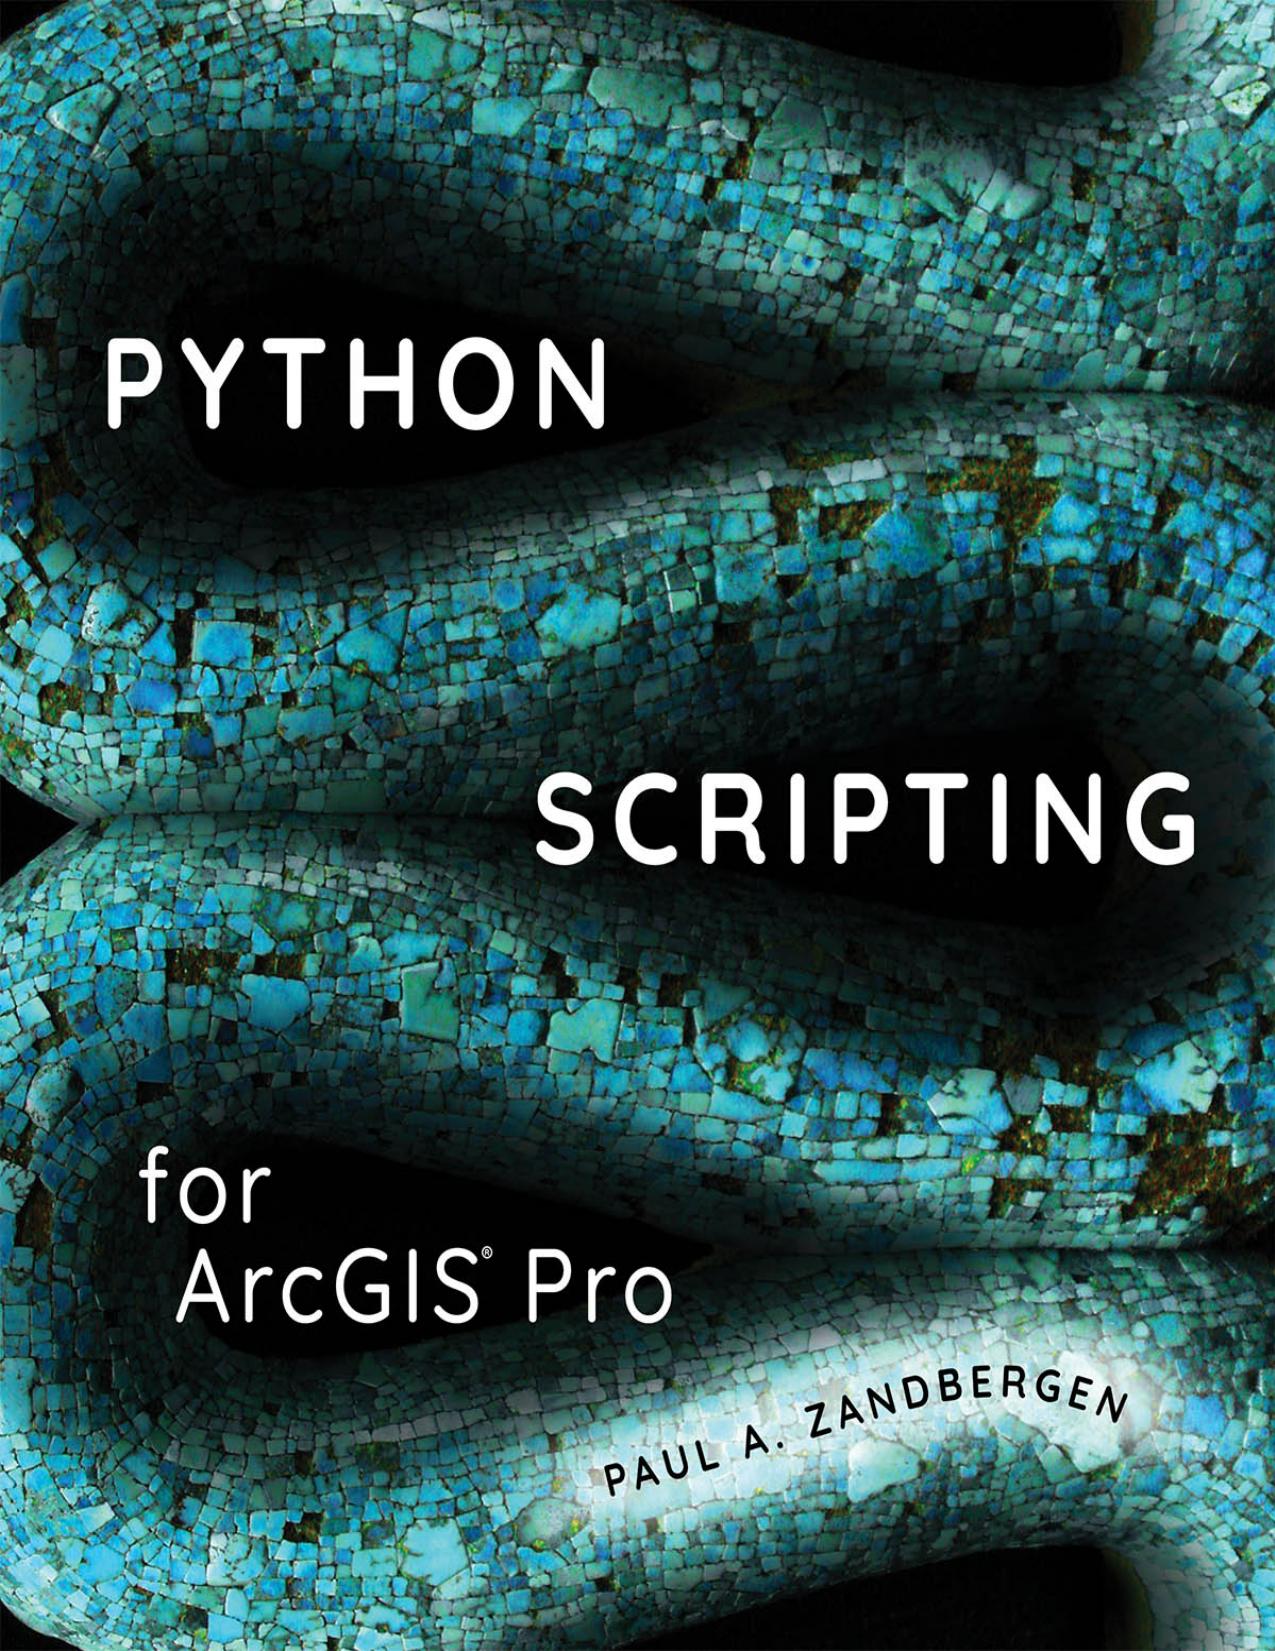 Python Scripting for ArcGIS Pro 1st Edition by Paul A. Zandbergen